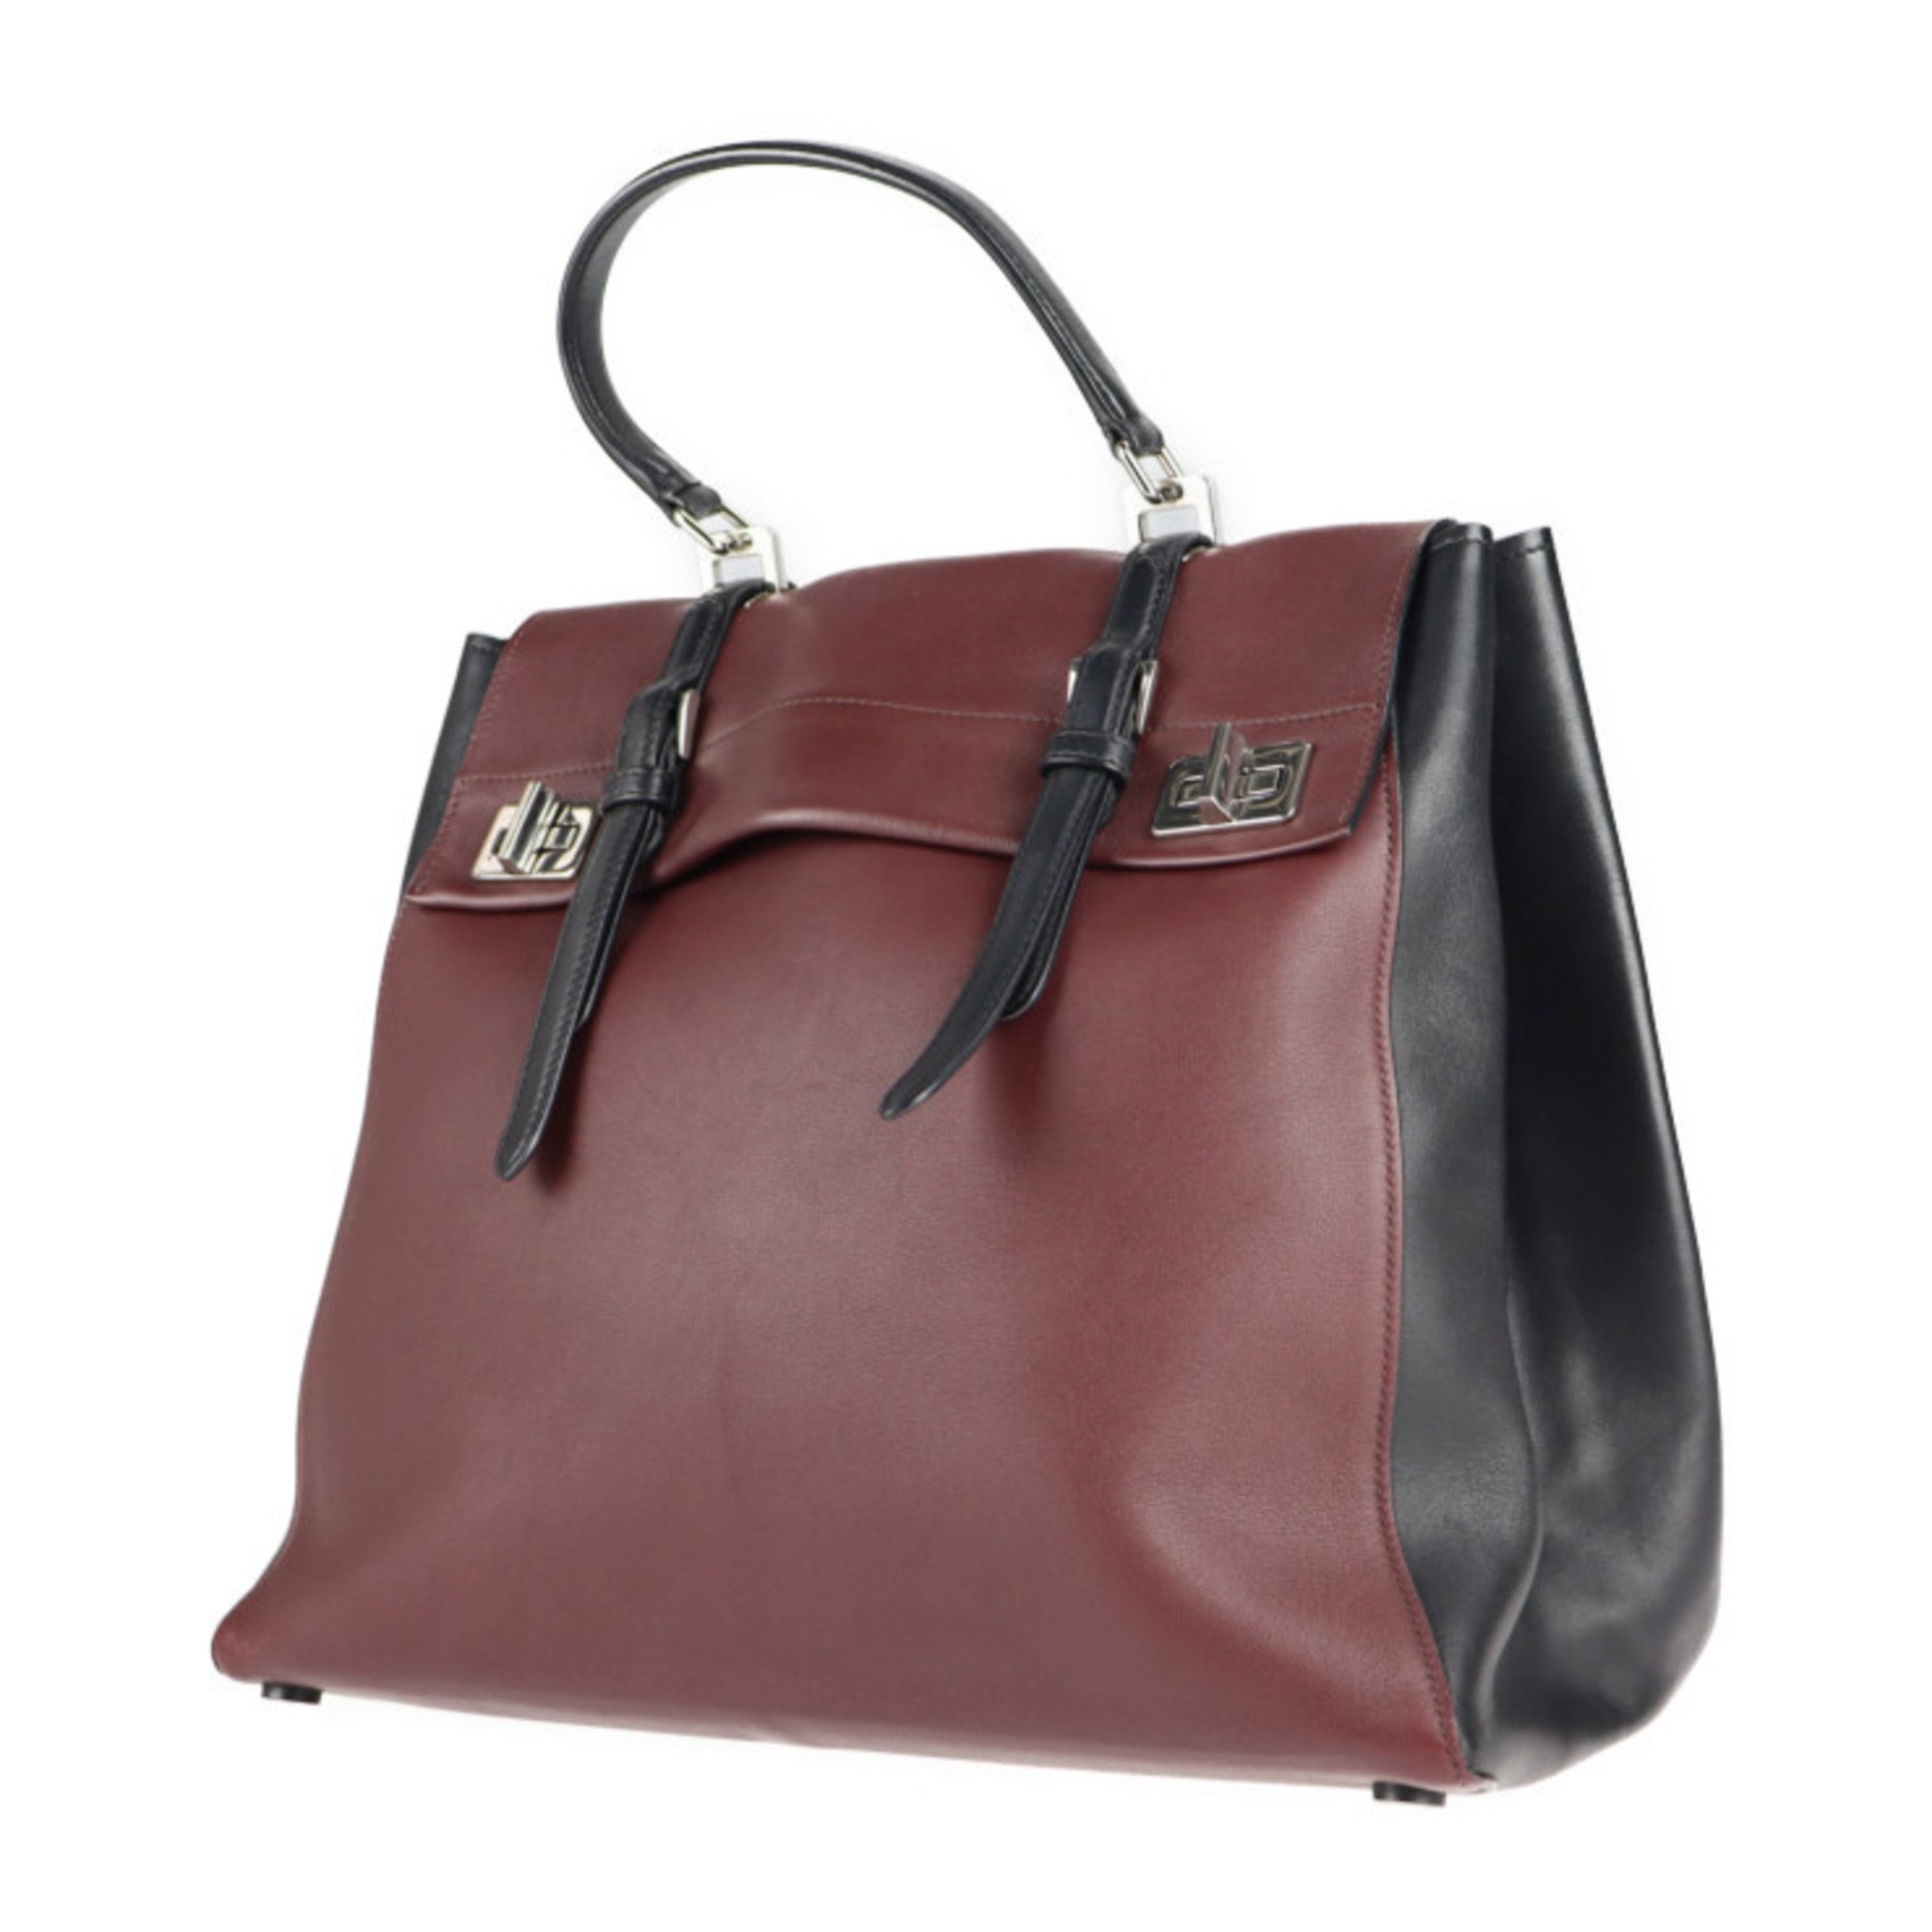 PRADA Prada double turn lock handbag leather Bordeaux black bicolor 2WAY shoulder Thoth